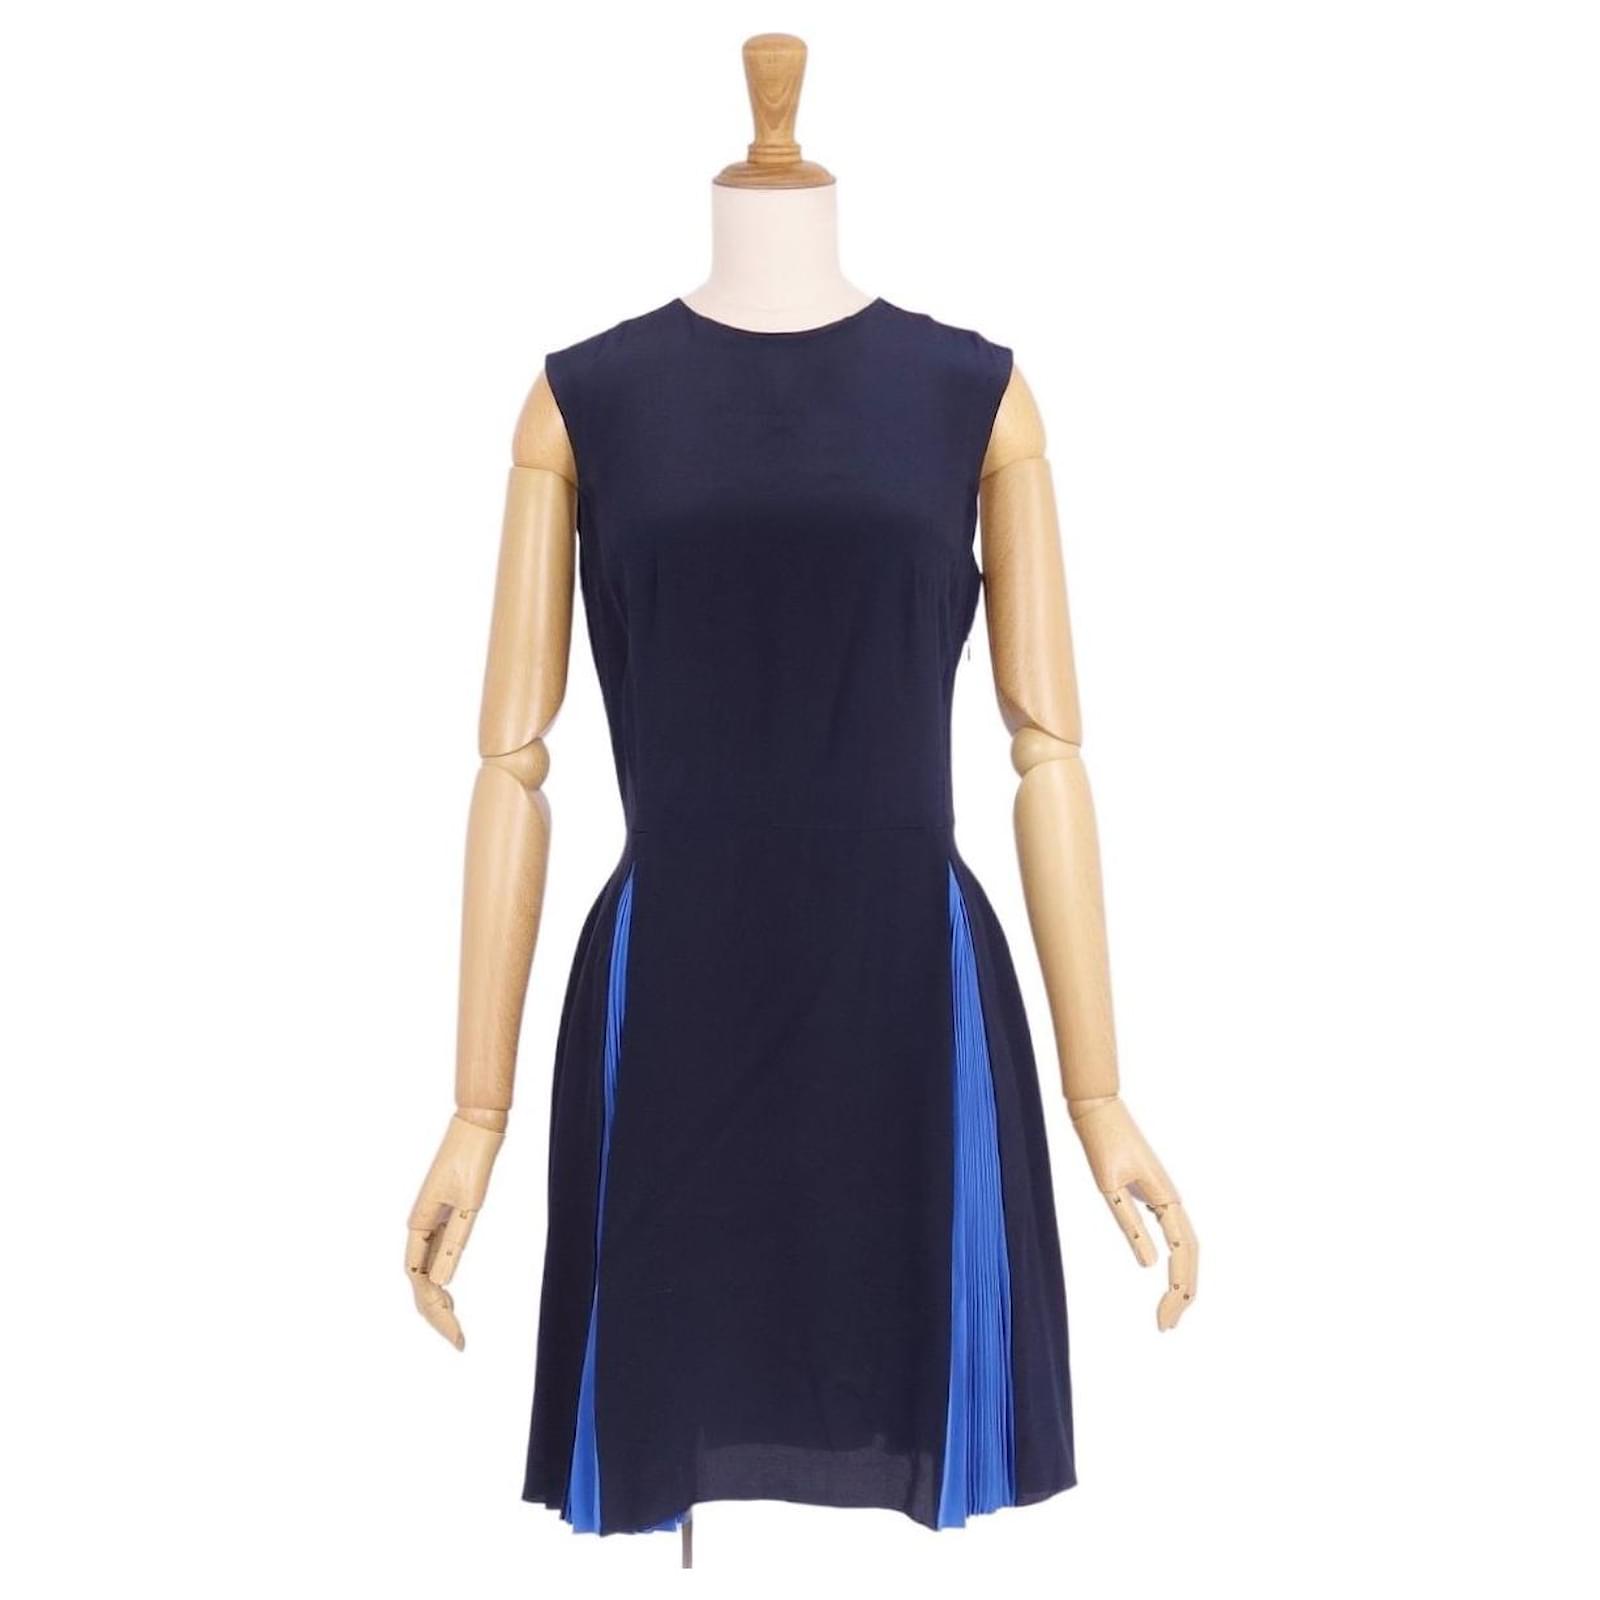 Reeta Fashion Western Wear Navy Blue Knitting (stretchable) Solid One Piece  Dress | Reeta Fashion